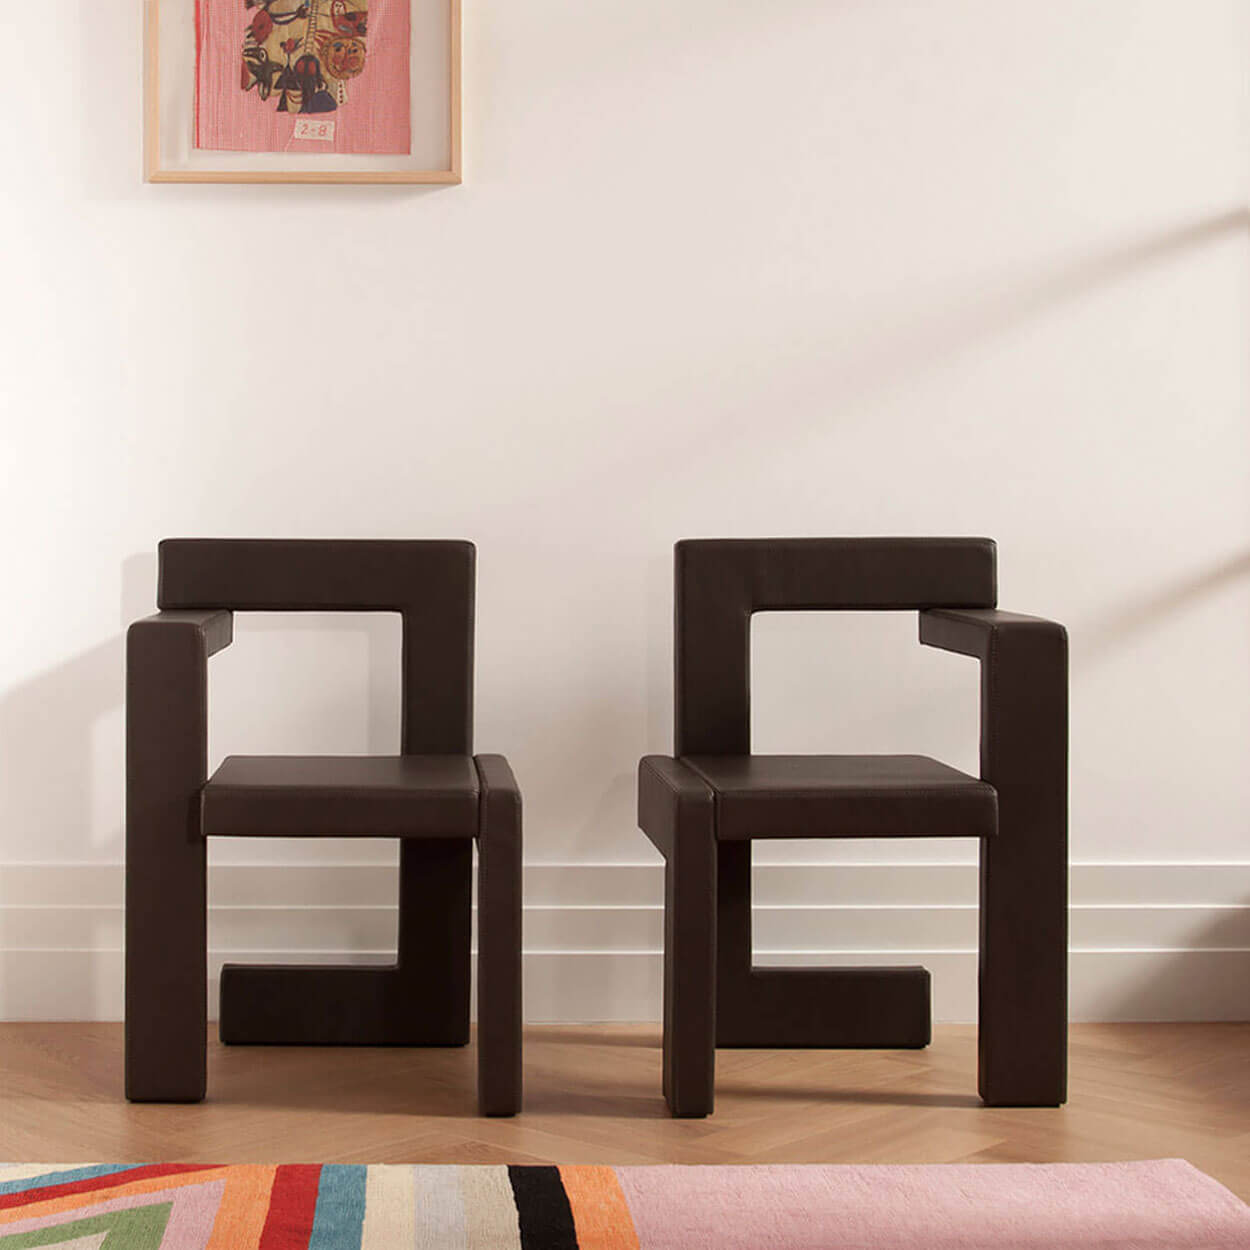 Steltman stoel Design